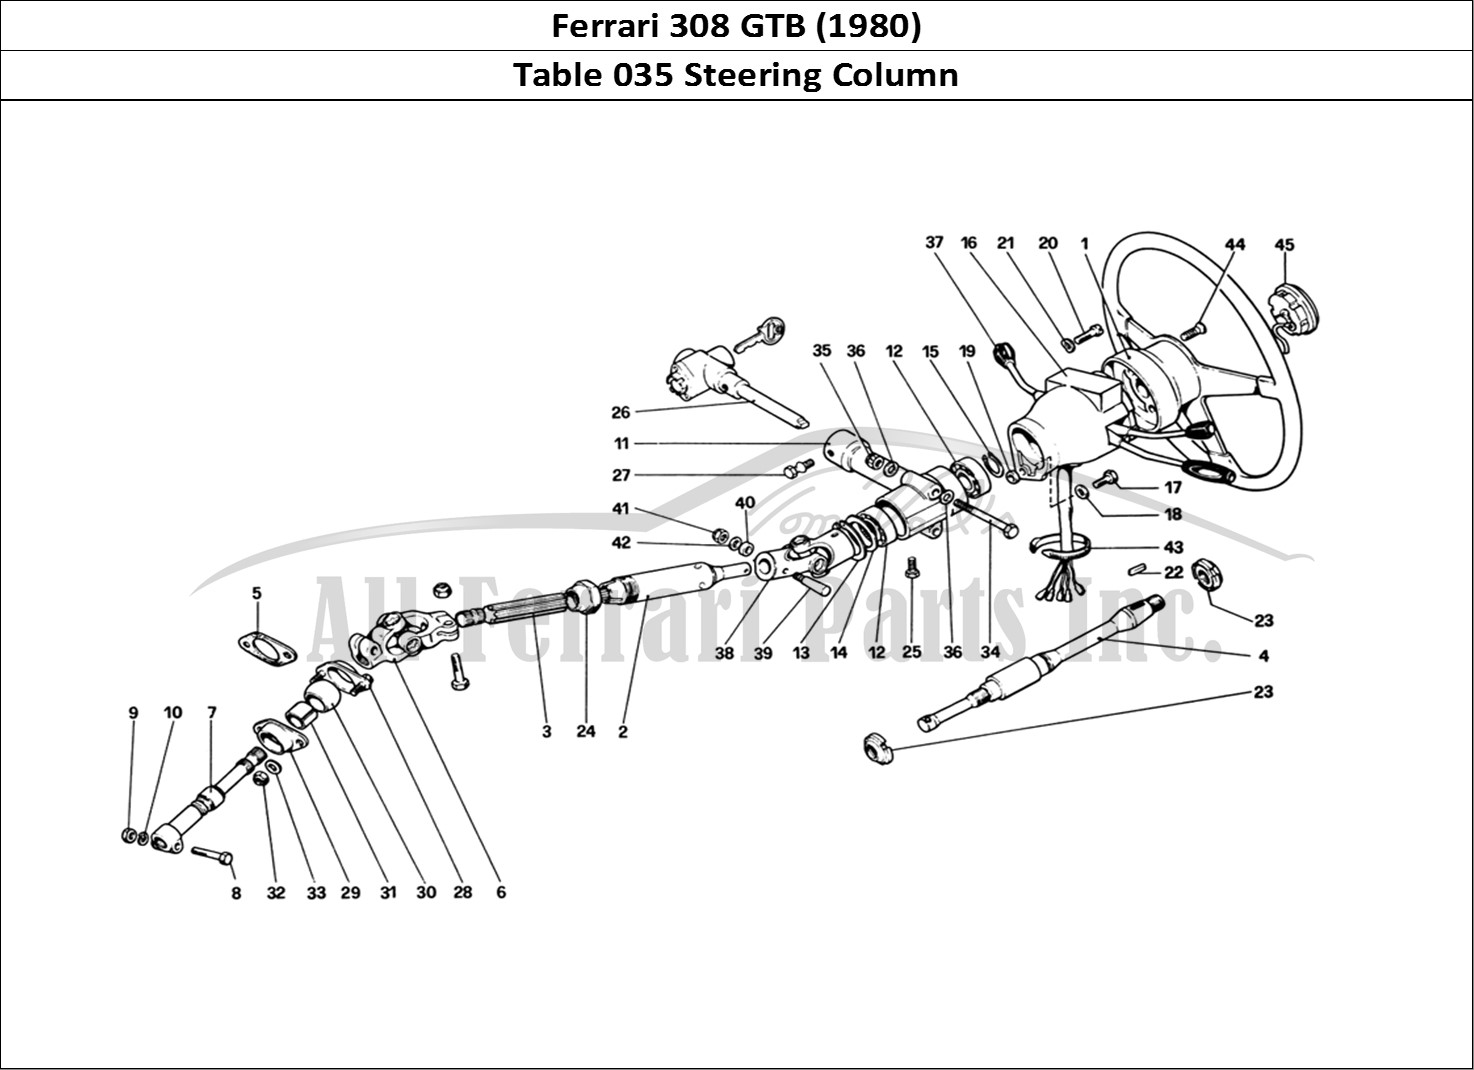 Ferrari Parts Ferrari 308 GTB (1980) Page 035 Steering Column